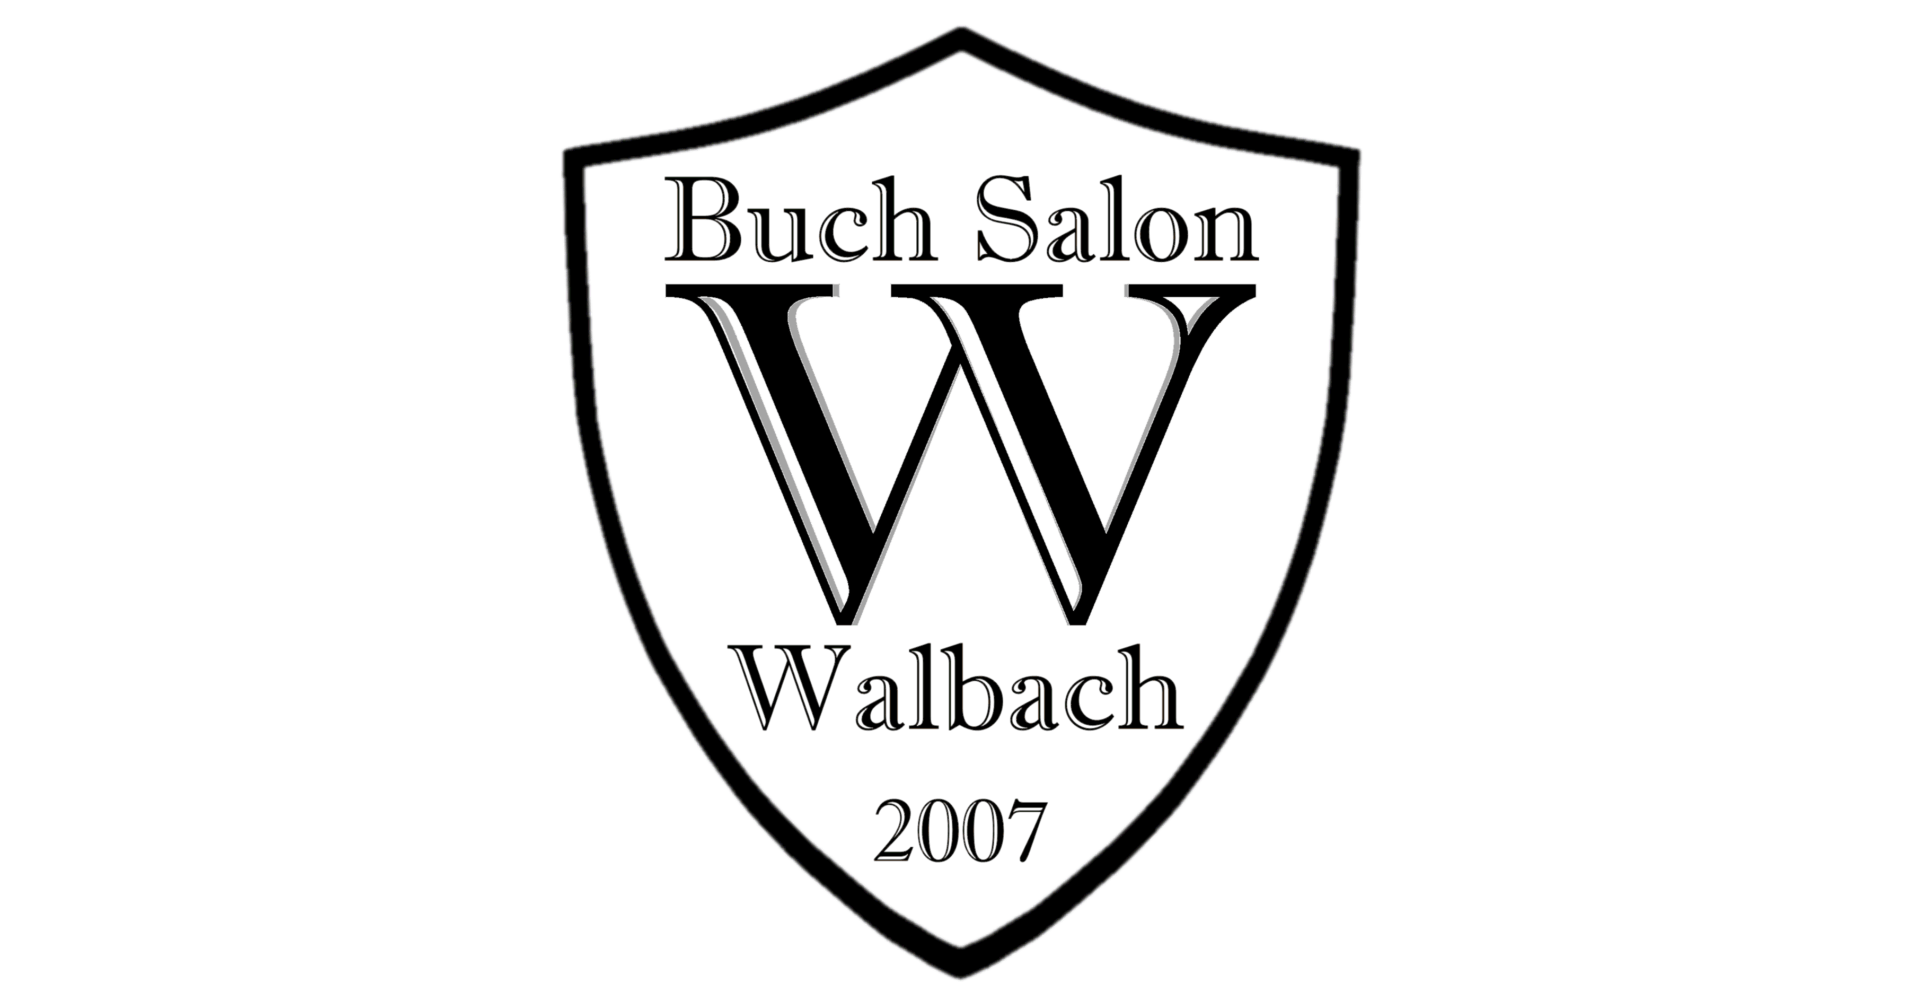 Buch Salon Walbach Verlag Logo Wappen